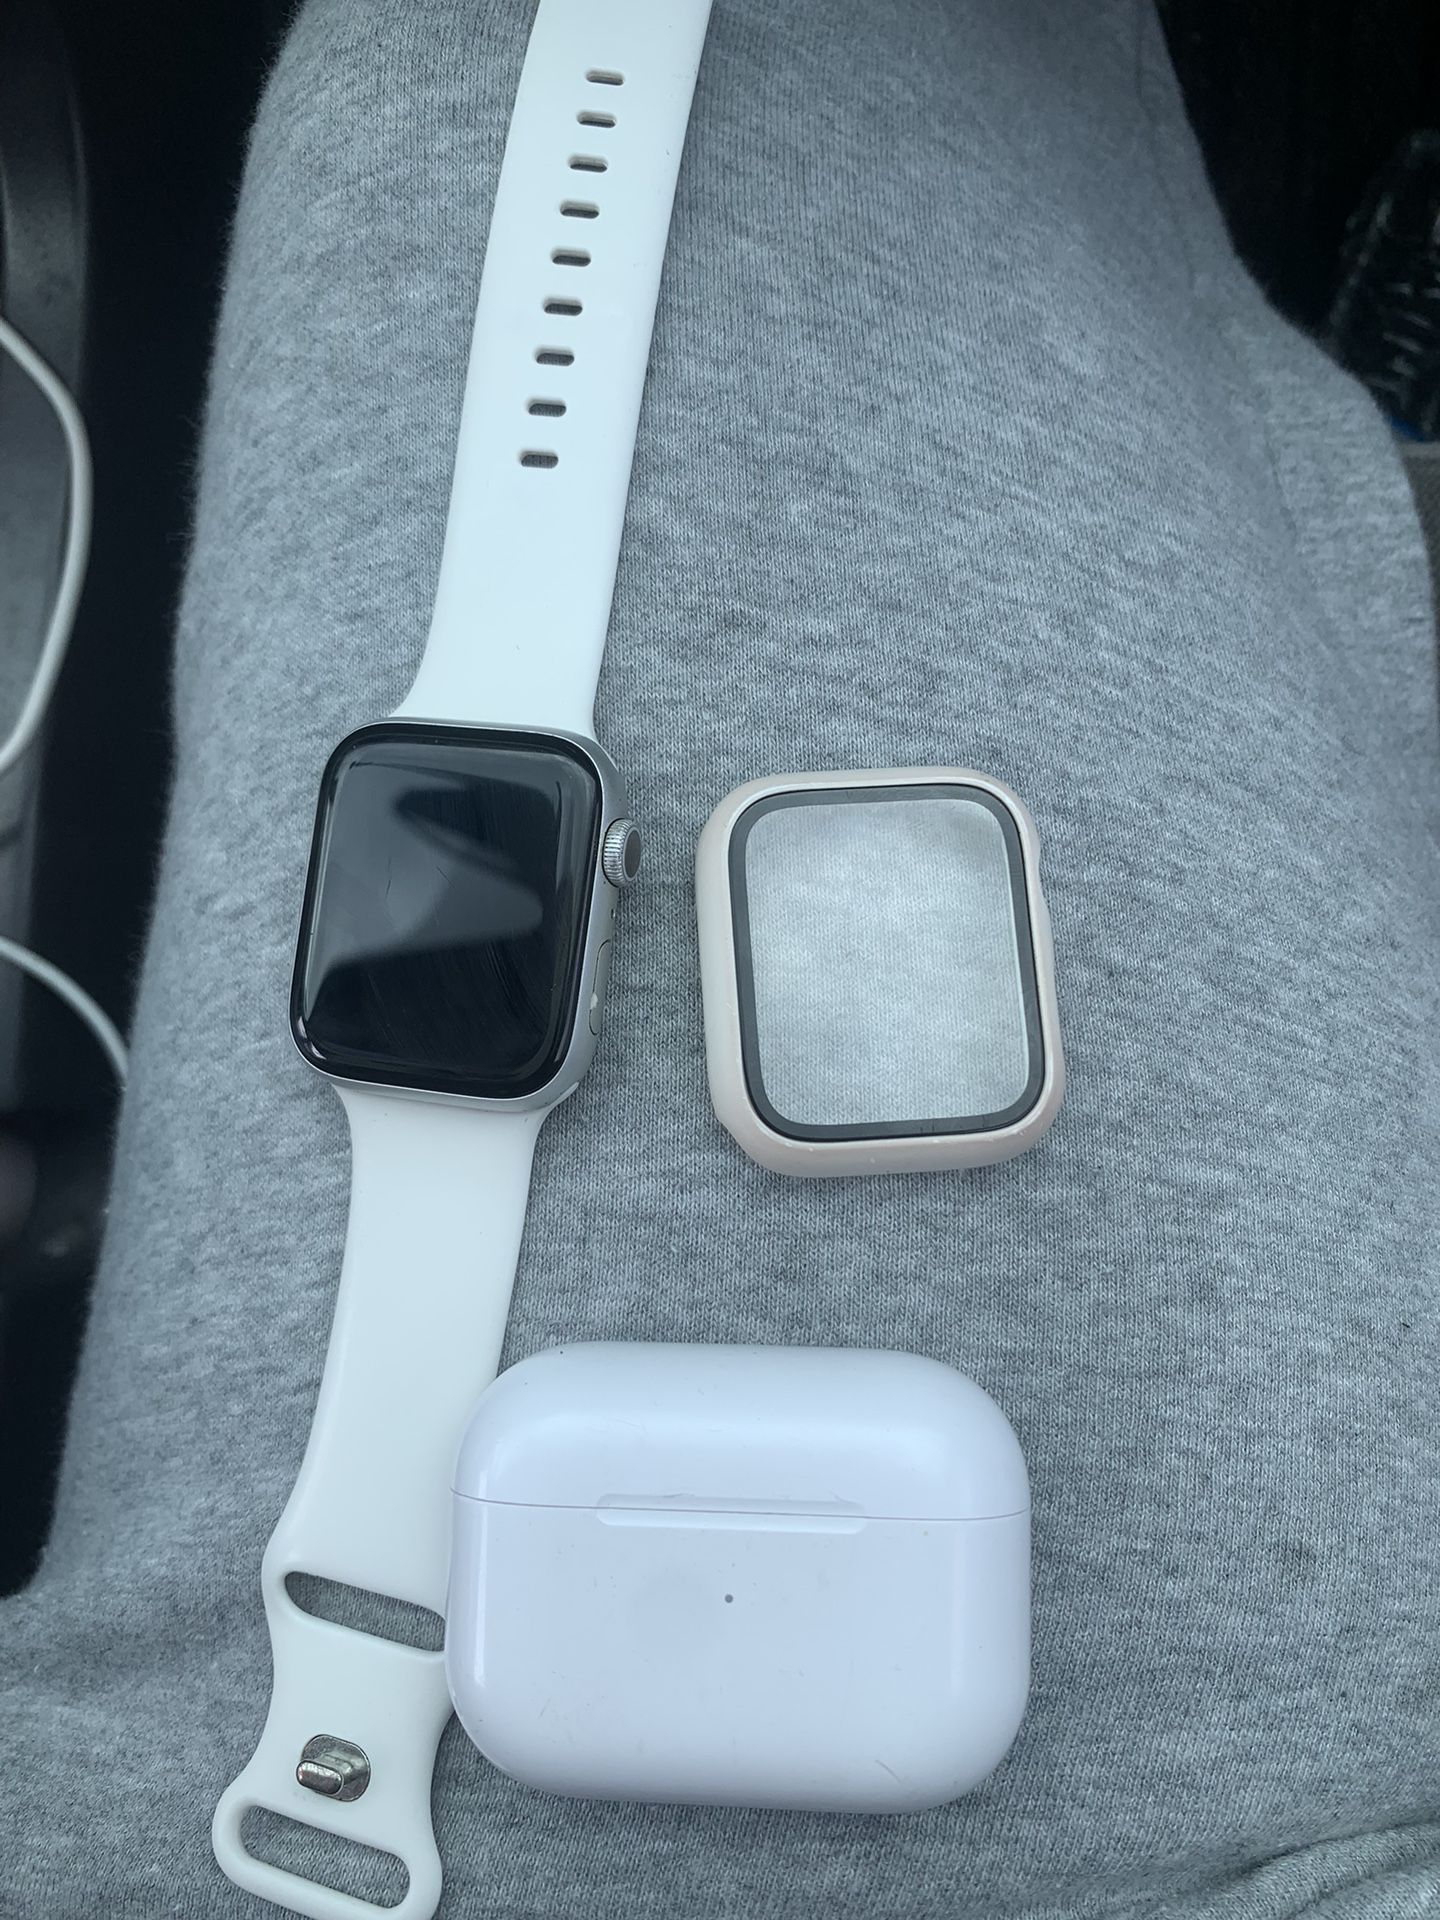 Apple Watch & Air Pod Pros 